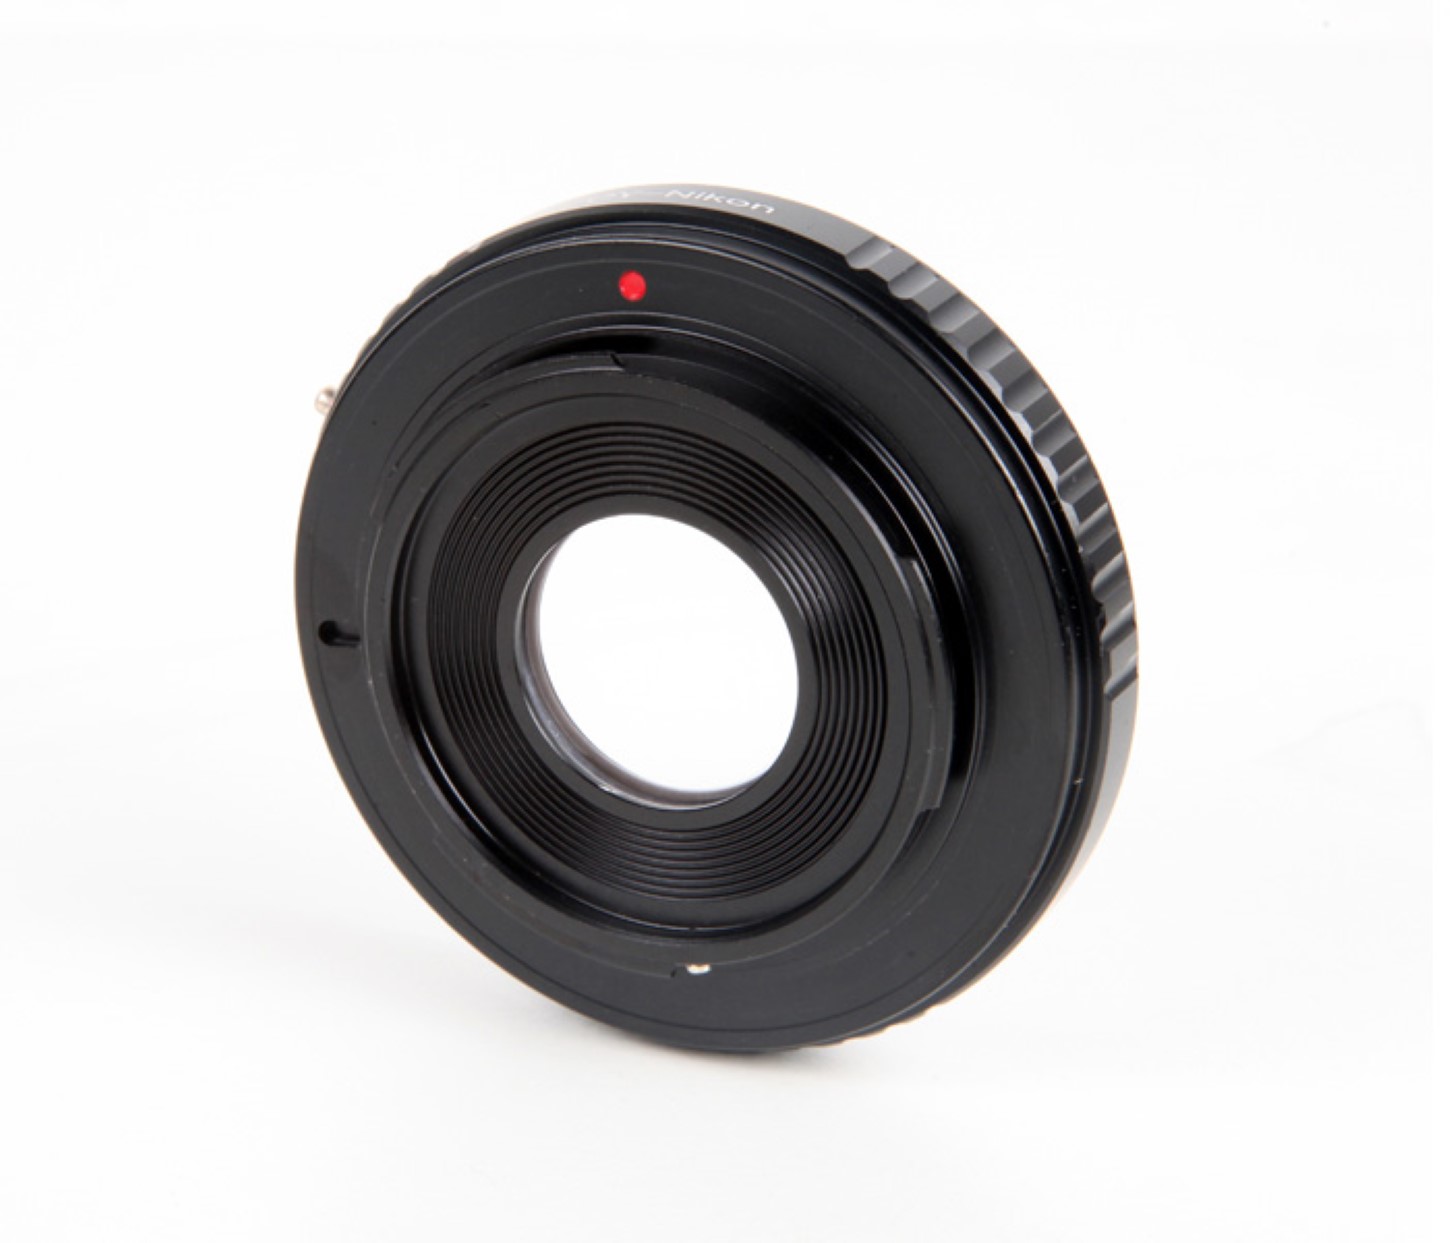 Contax Yashica -Objektive - Nikon Adapter + Korrektur Linse